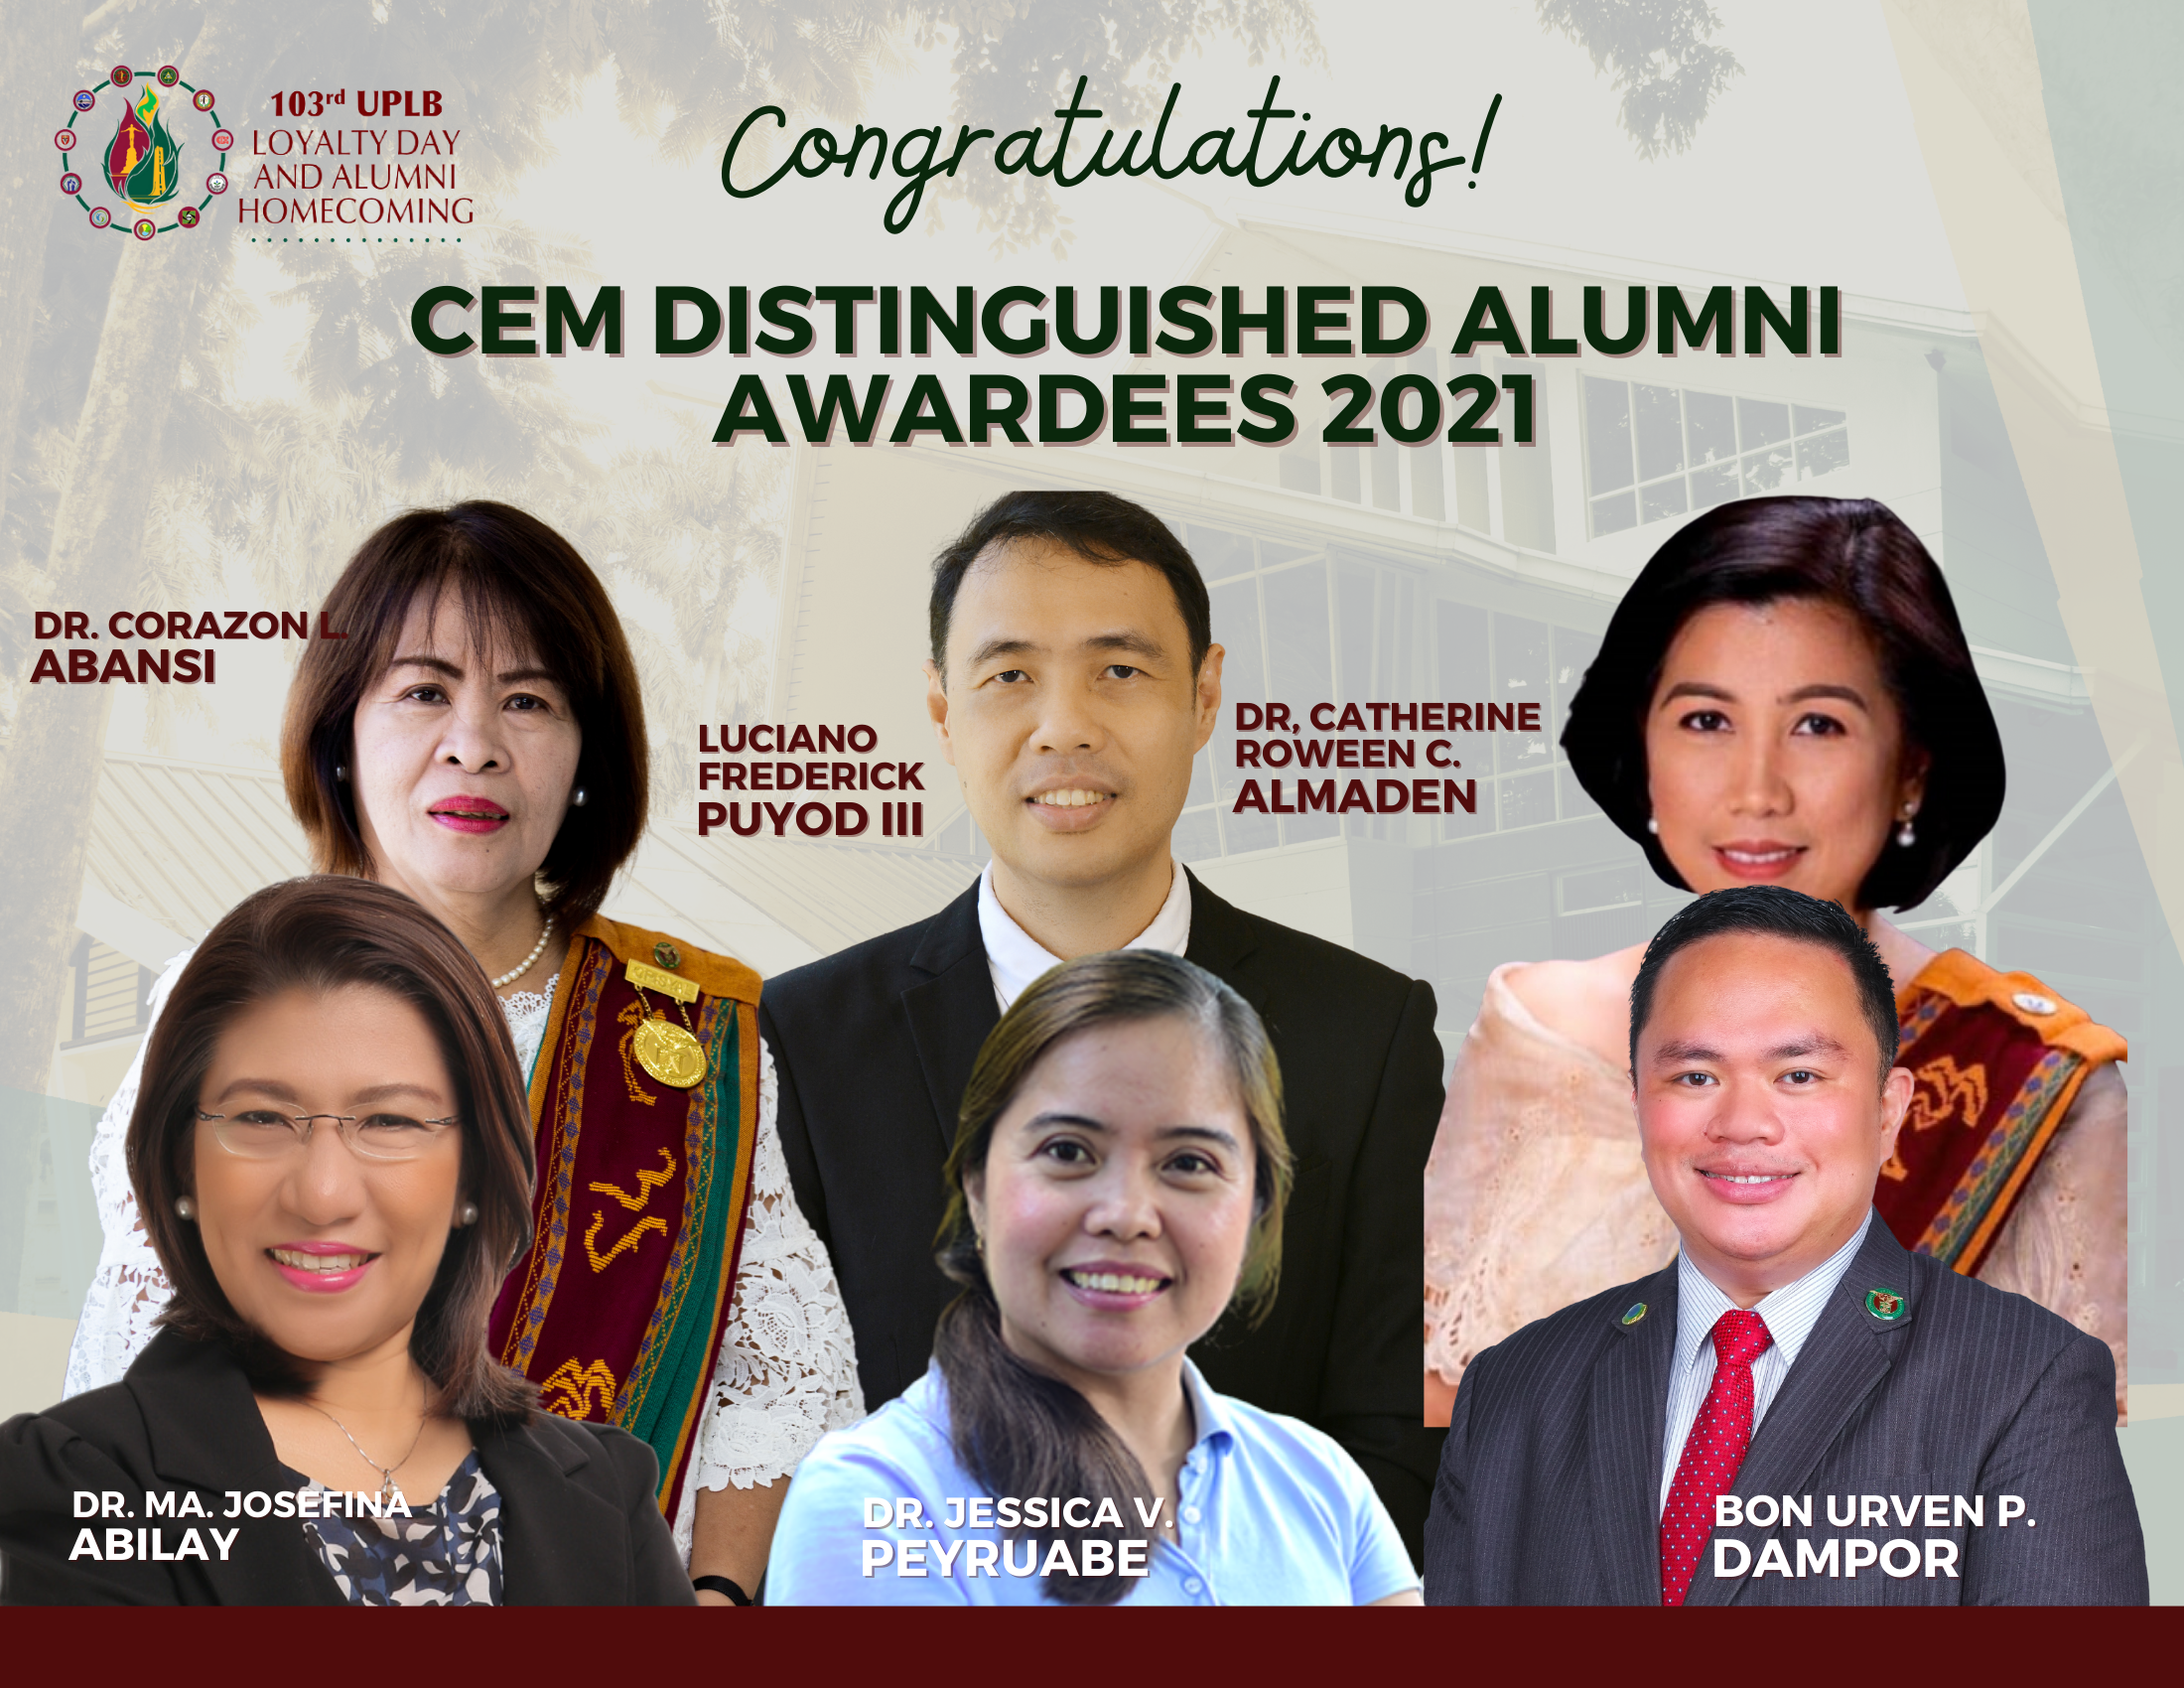 Six Alumni Awarded as  CEM Distinguished Alumni Awardees for UPLB's 103rd Loyalty Day